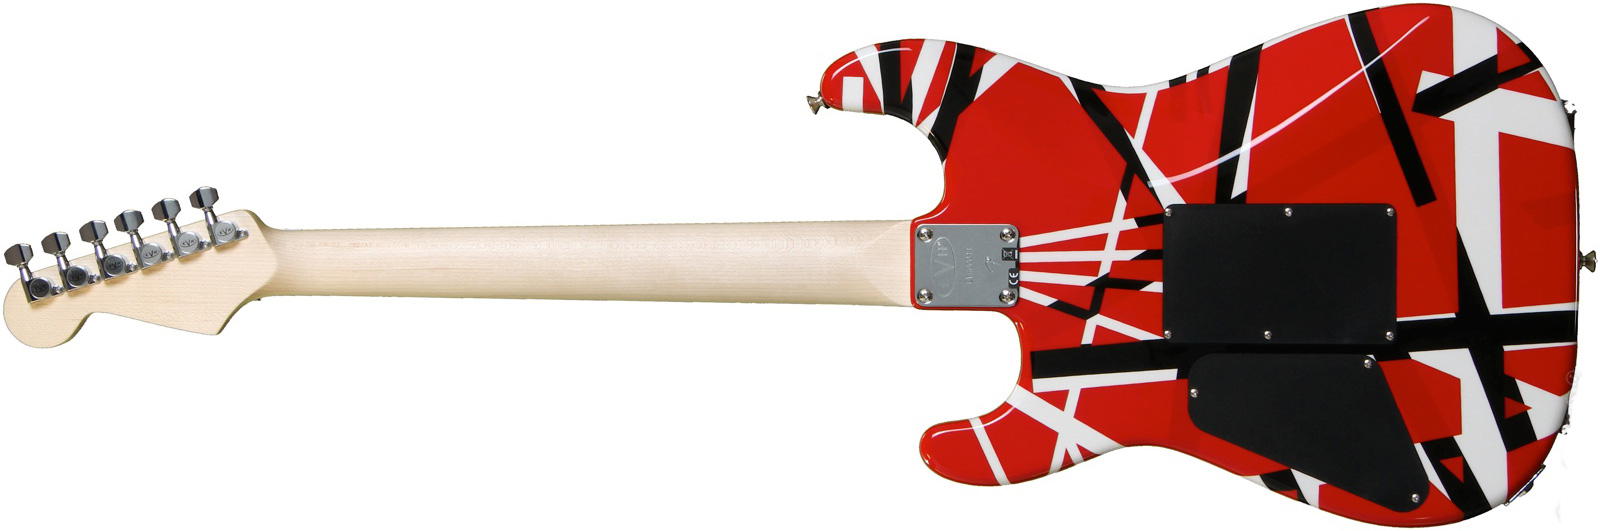 Evh Striped Series - Red With Black Stripes - E-Gitarre in Str-Form - Variation 3